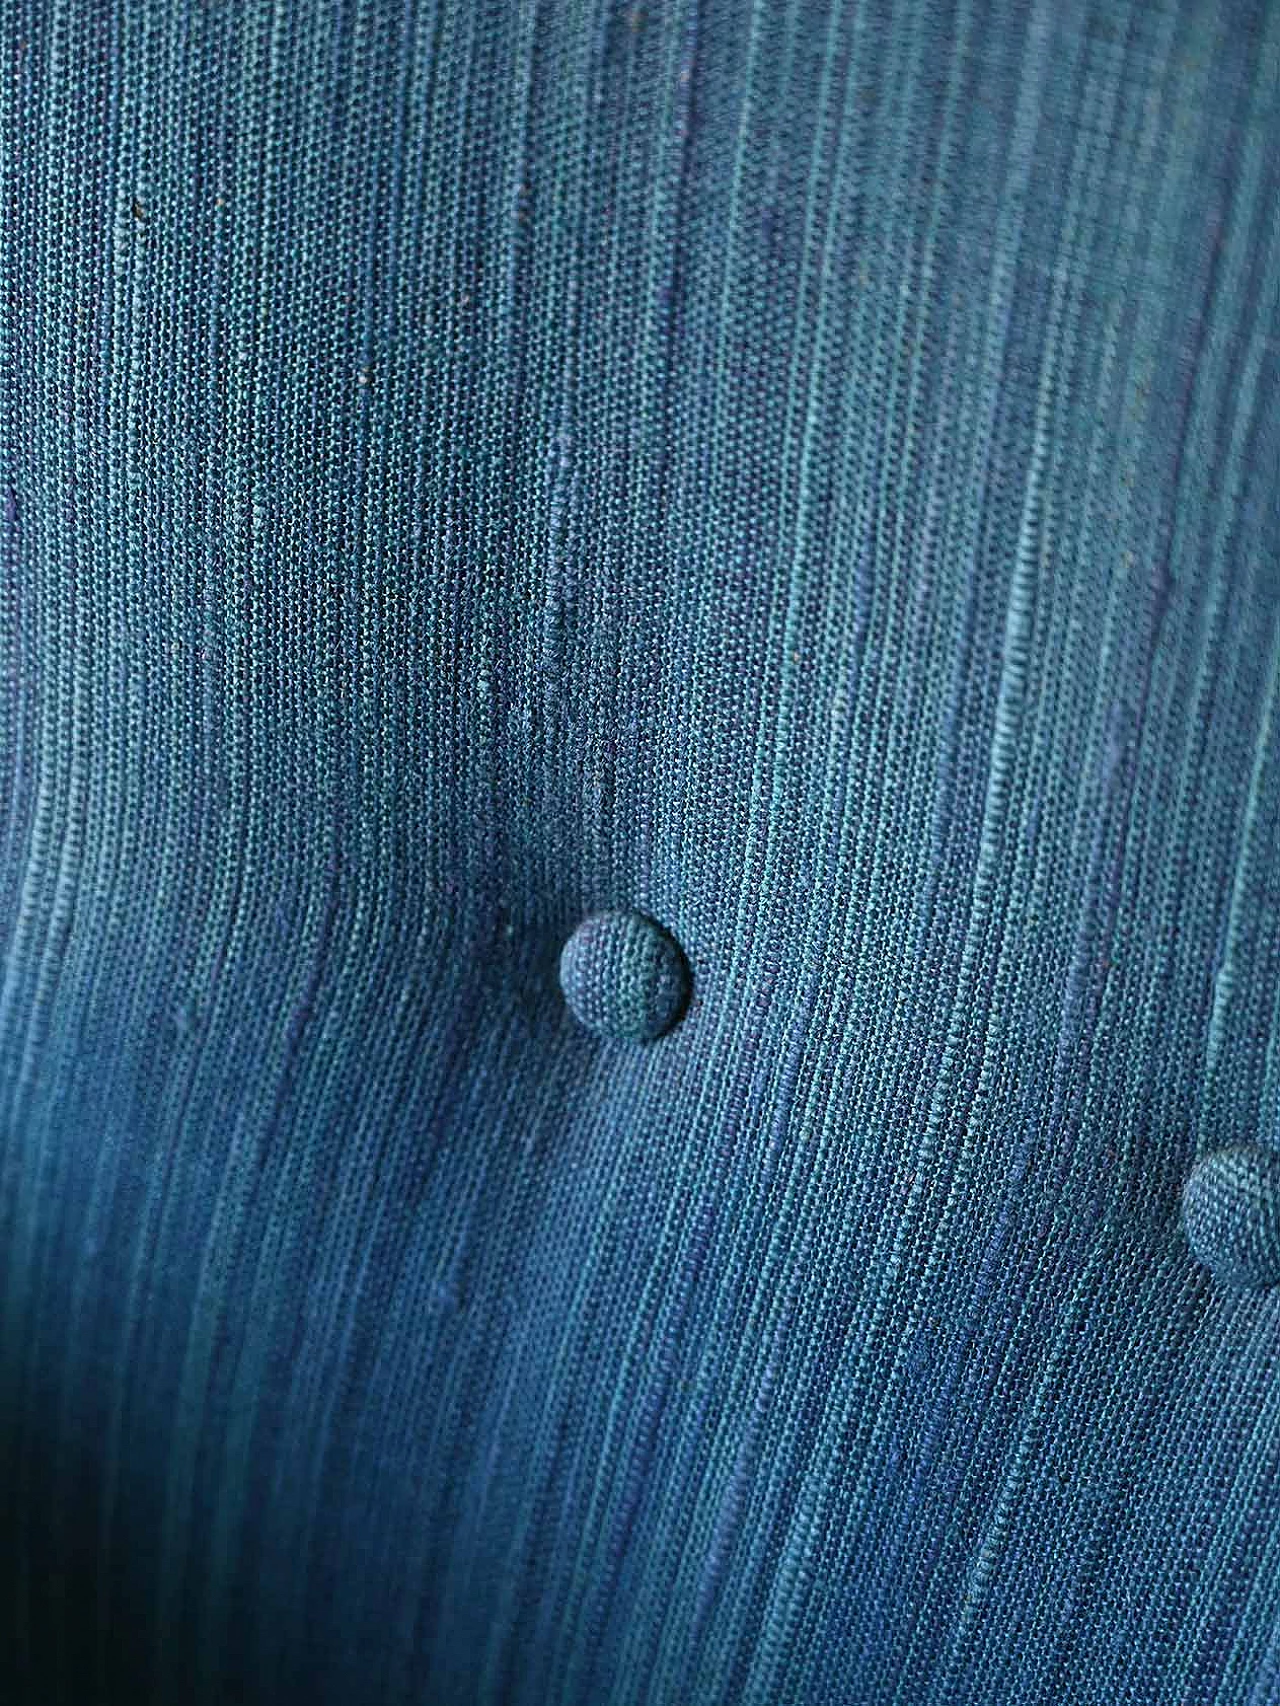 Poltrona scandinava in tessuto blu, anni '60 10